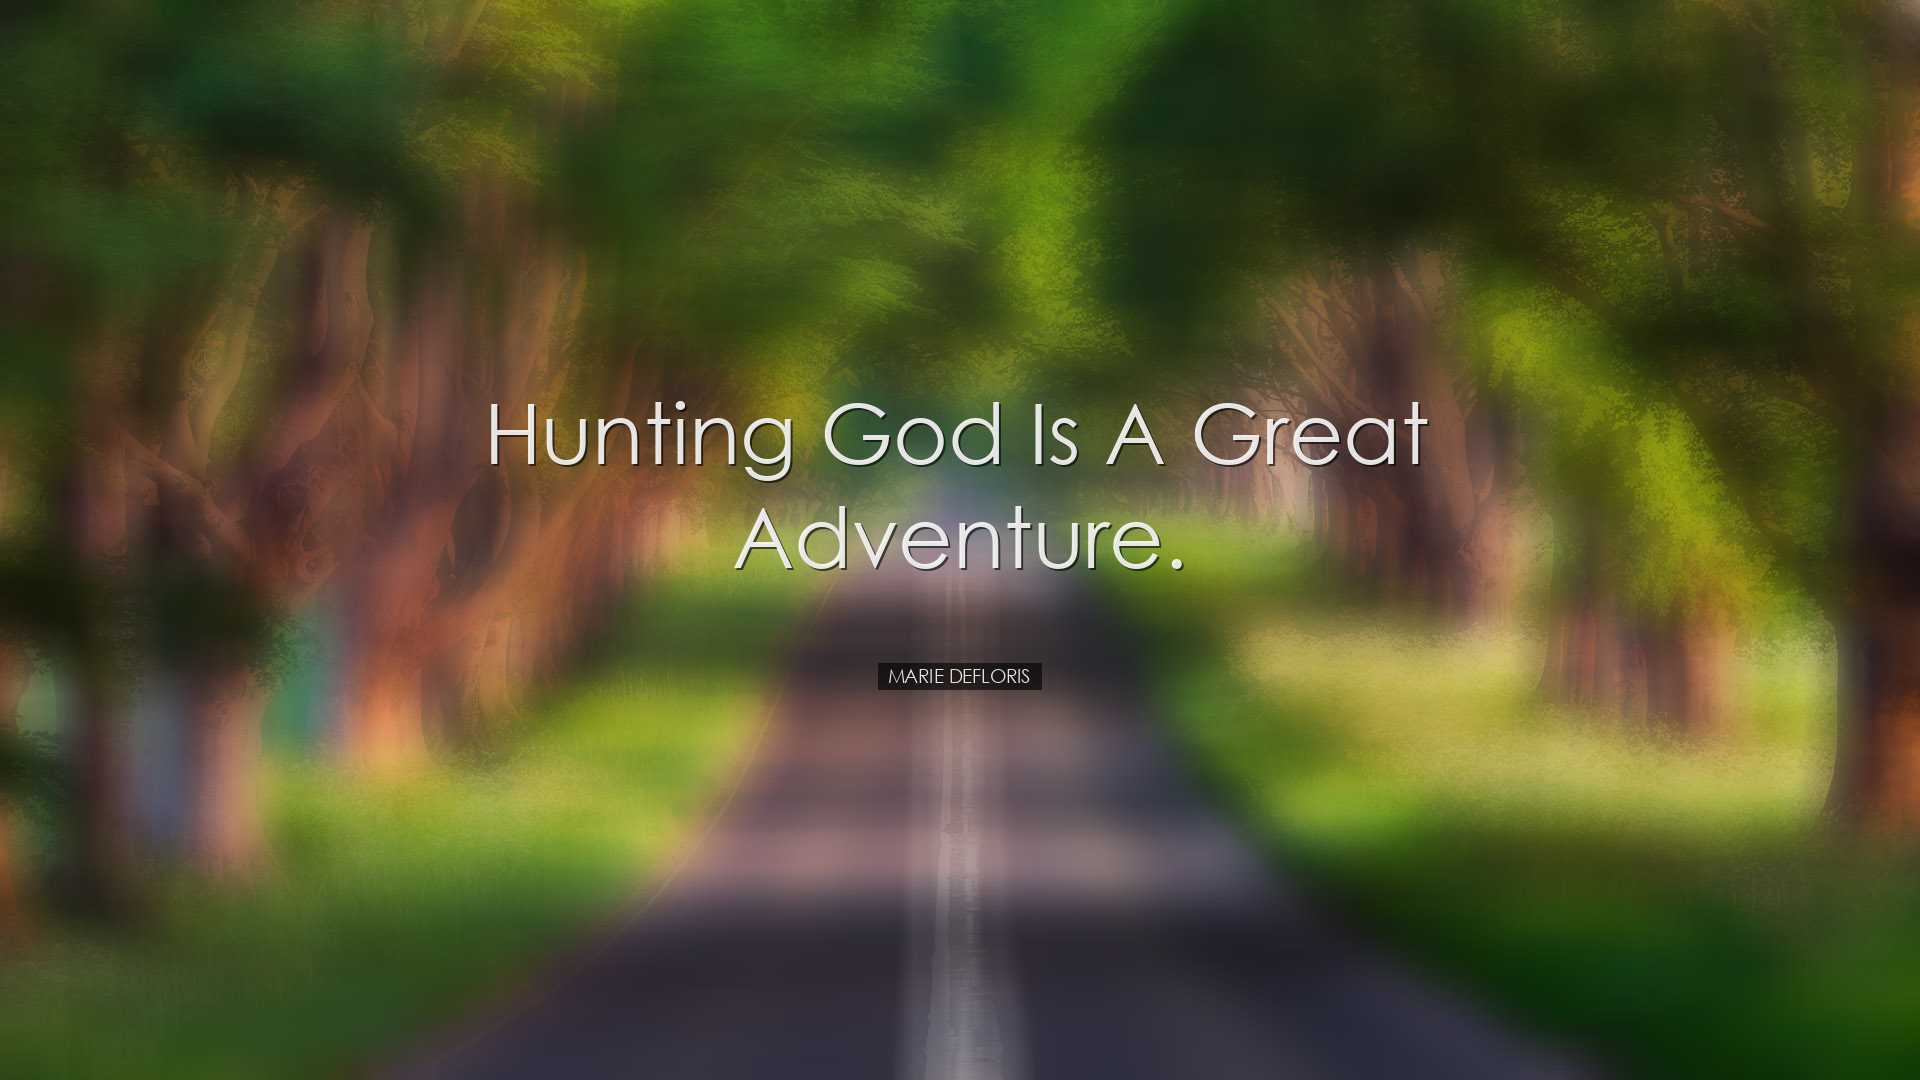 Hunting God is a great adventure. - Marie DeFloris